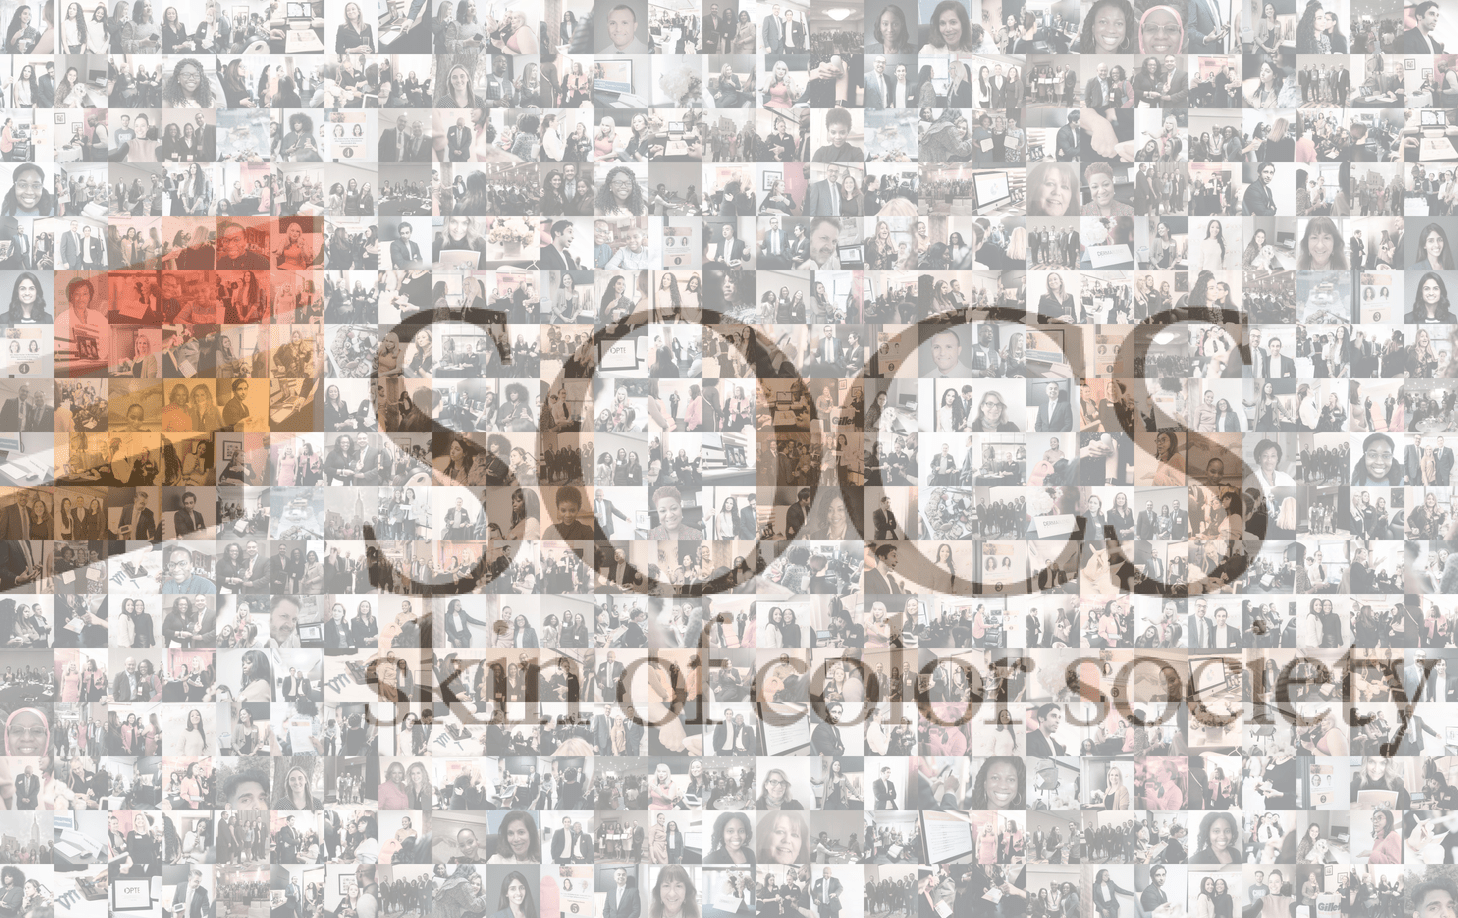 17th Annual Skin of Color Society<br>Virtual Scientific Symposium Recap-banner-image